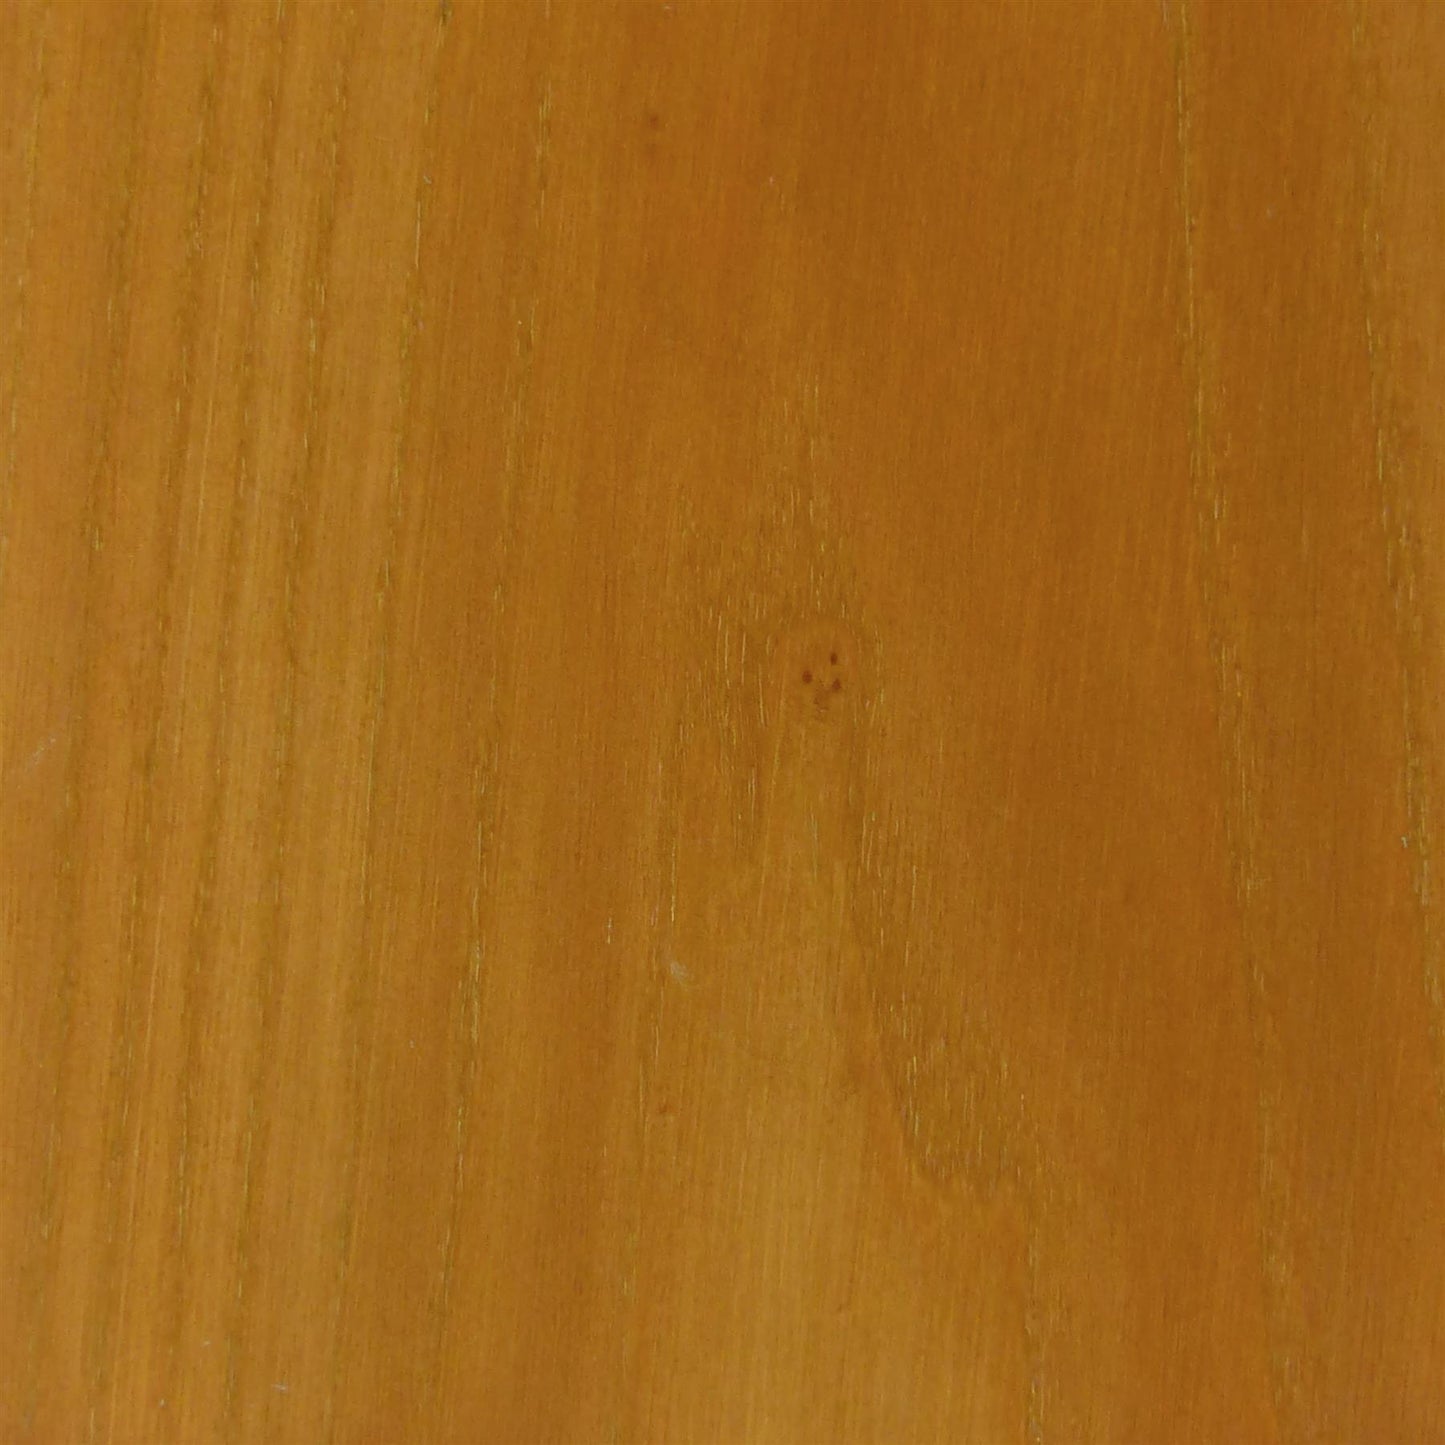 dartfords Golden Oak Interior Water Based Wood Dye - 1 litre Tin